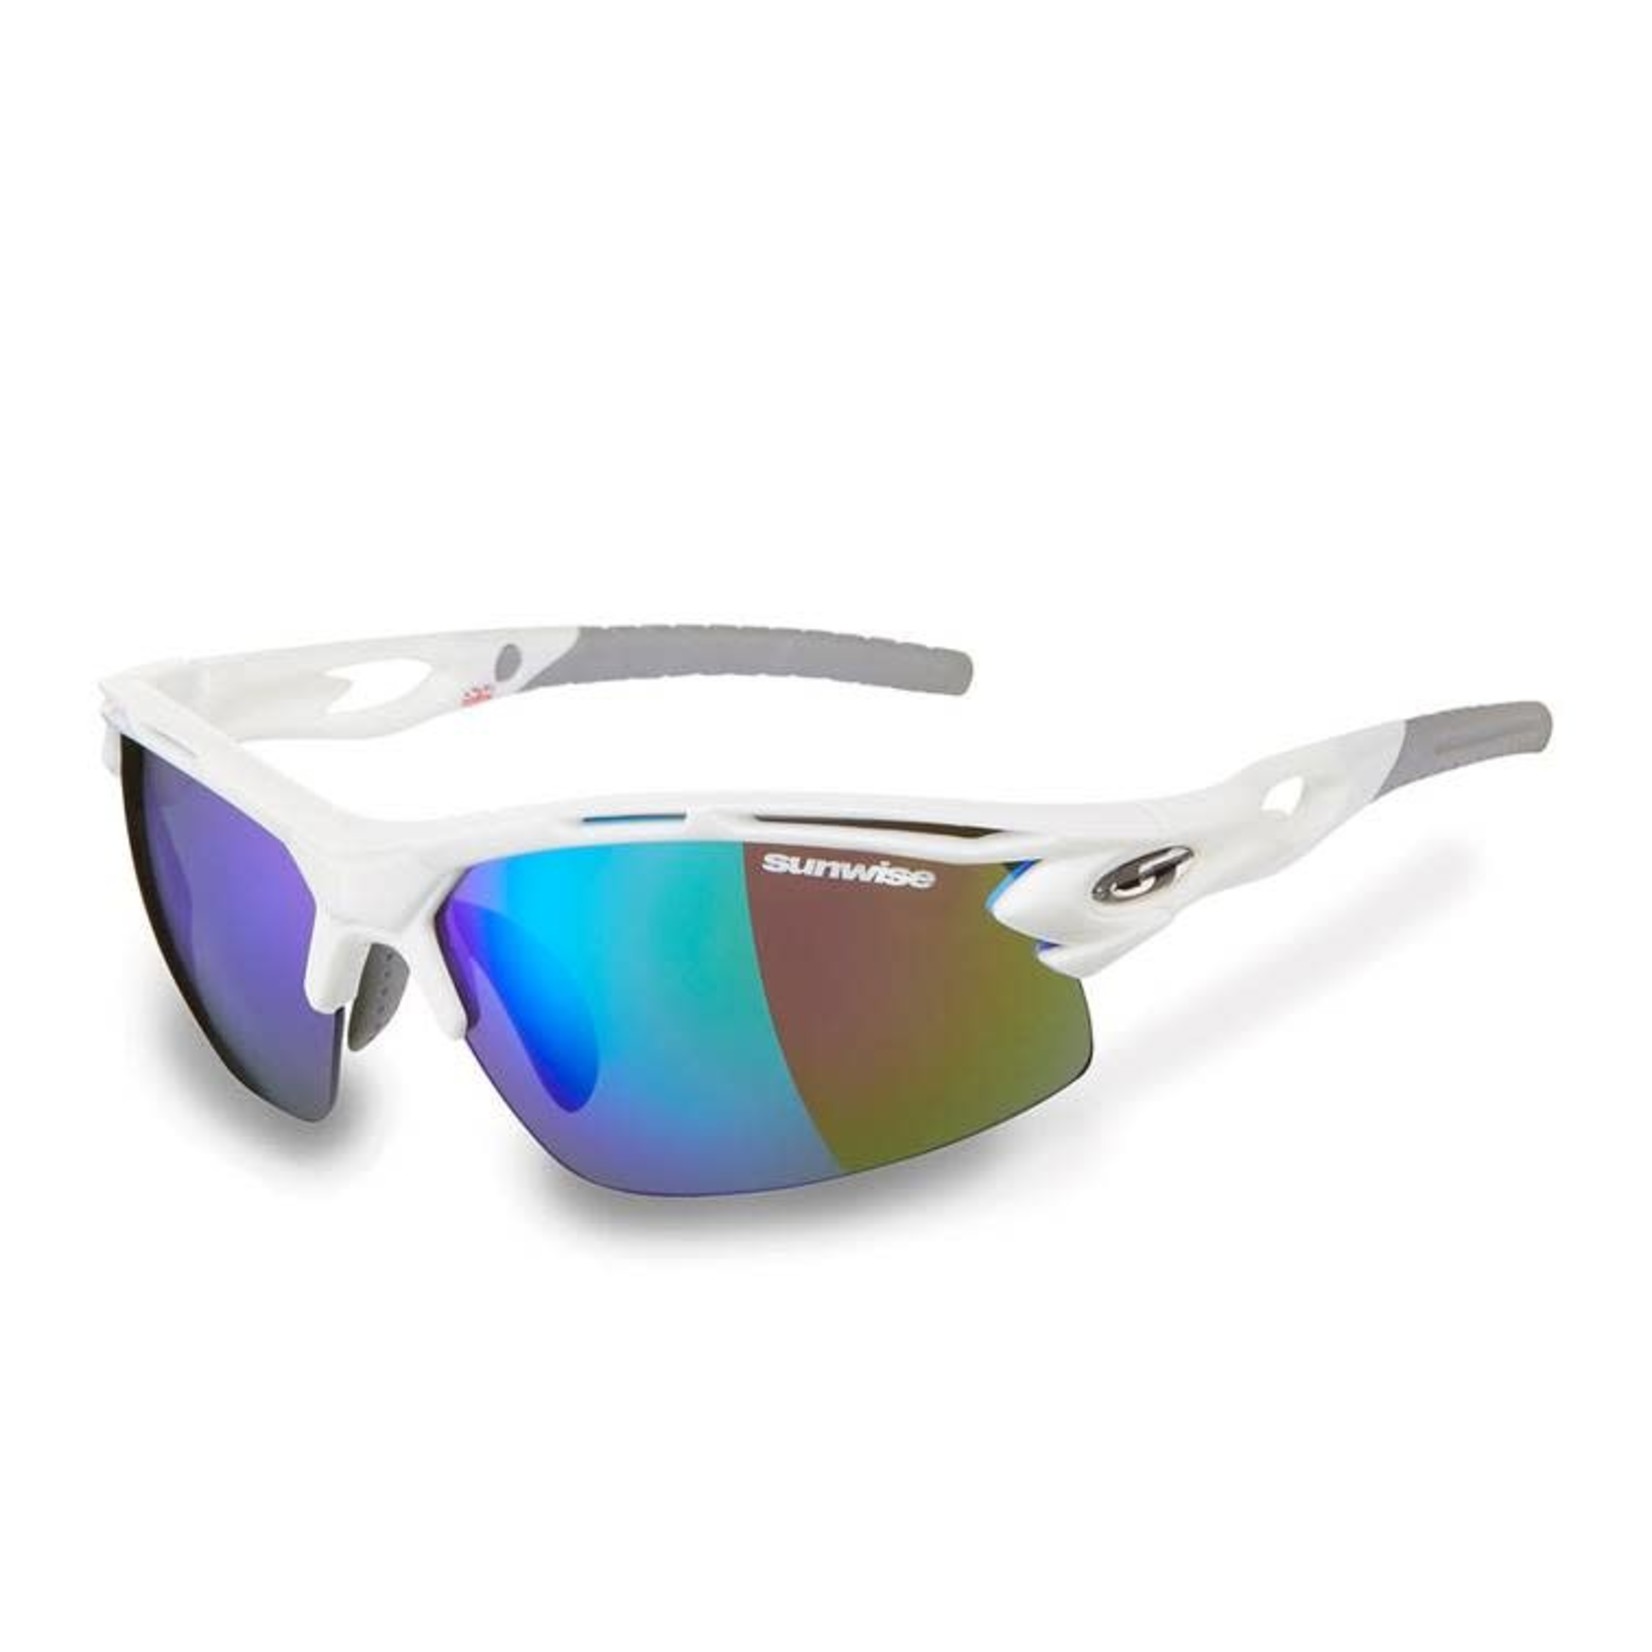 Sunwise Vertex Sunglasses White